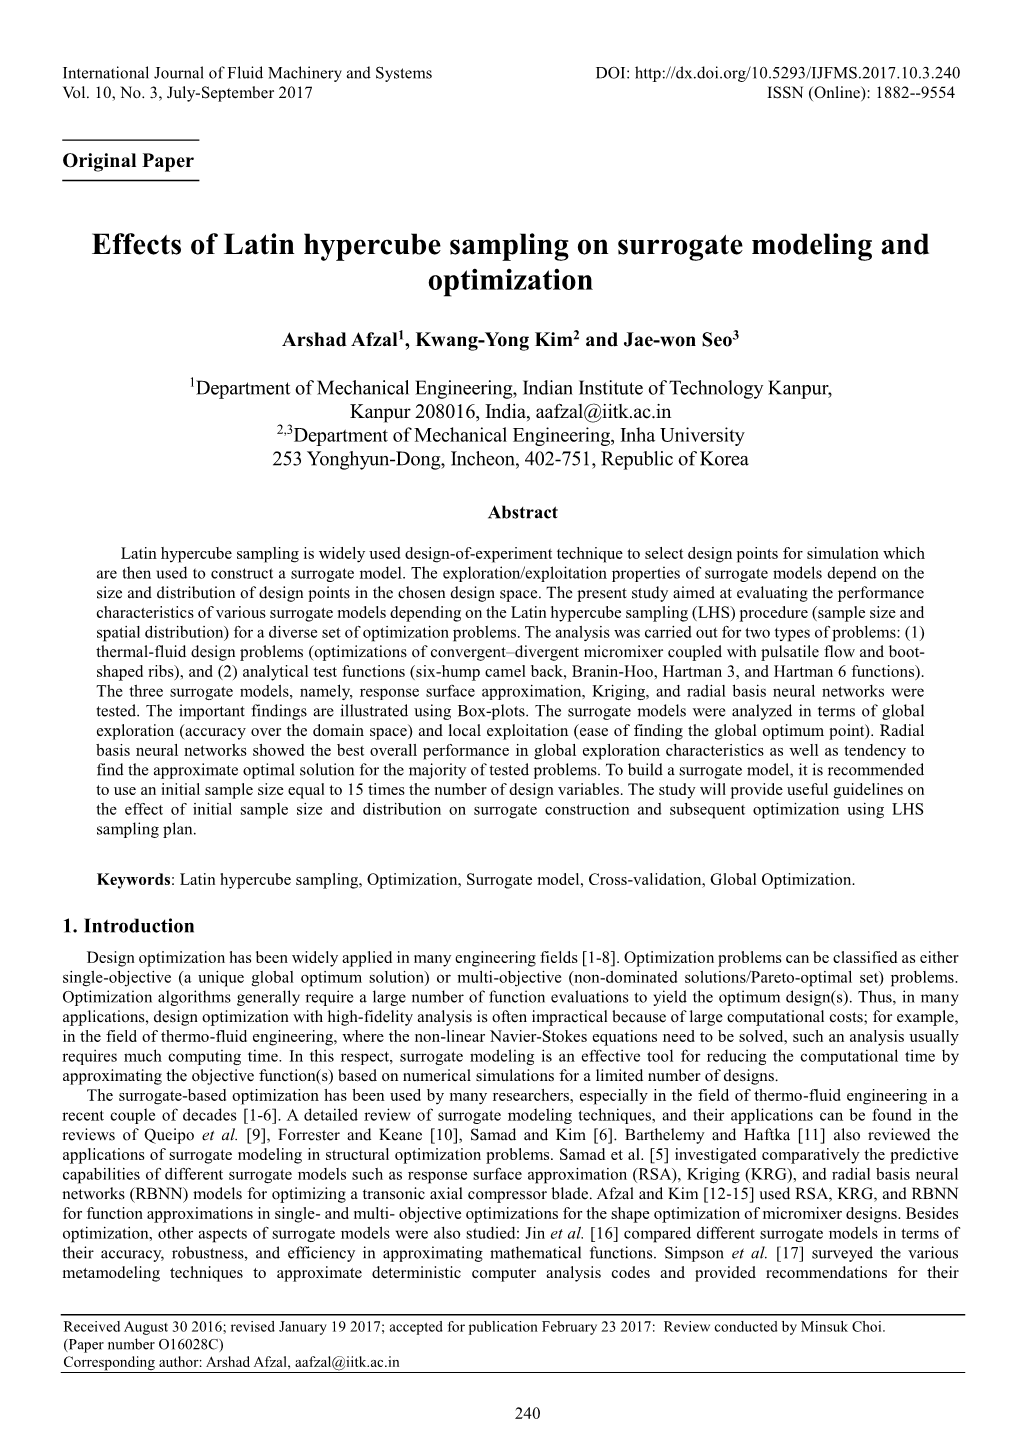 Effects of Latin Hypercube Sampling on Surrogate Modeling and Optimization